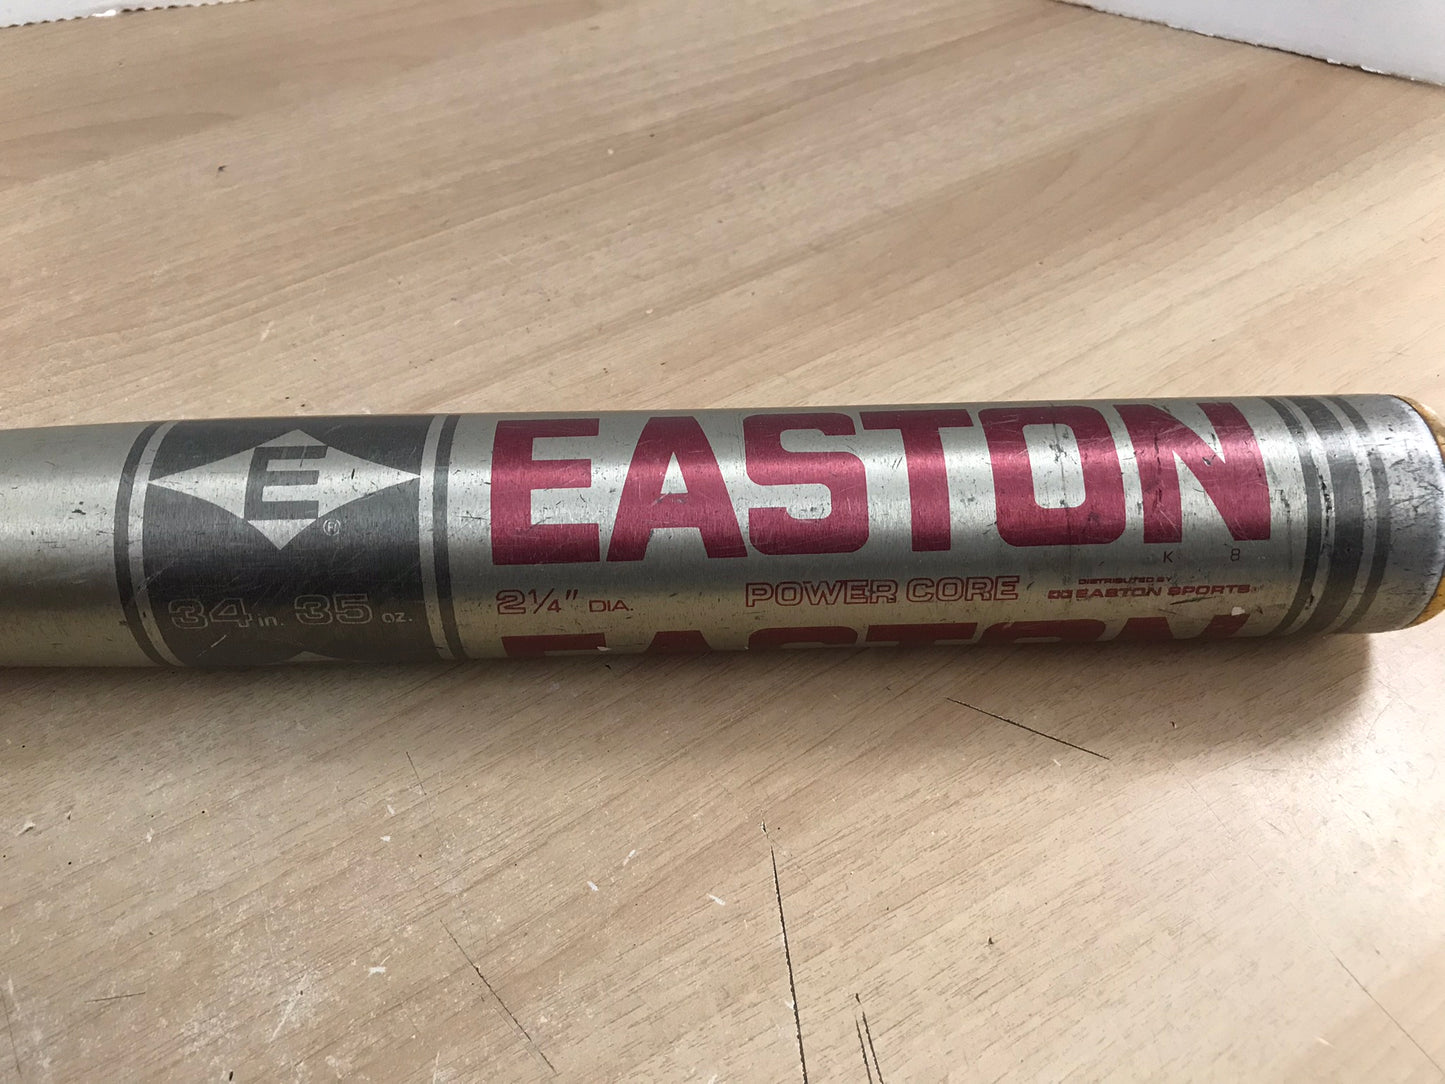 Baseball Bat 34 inch 35 oz Easton Power Core Softball Chrome Grey Red